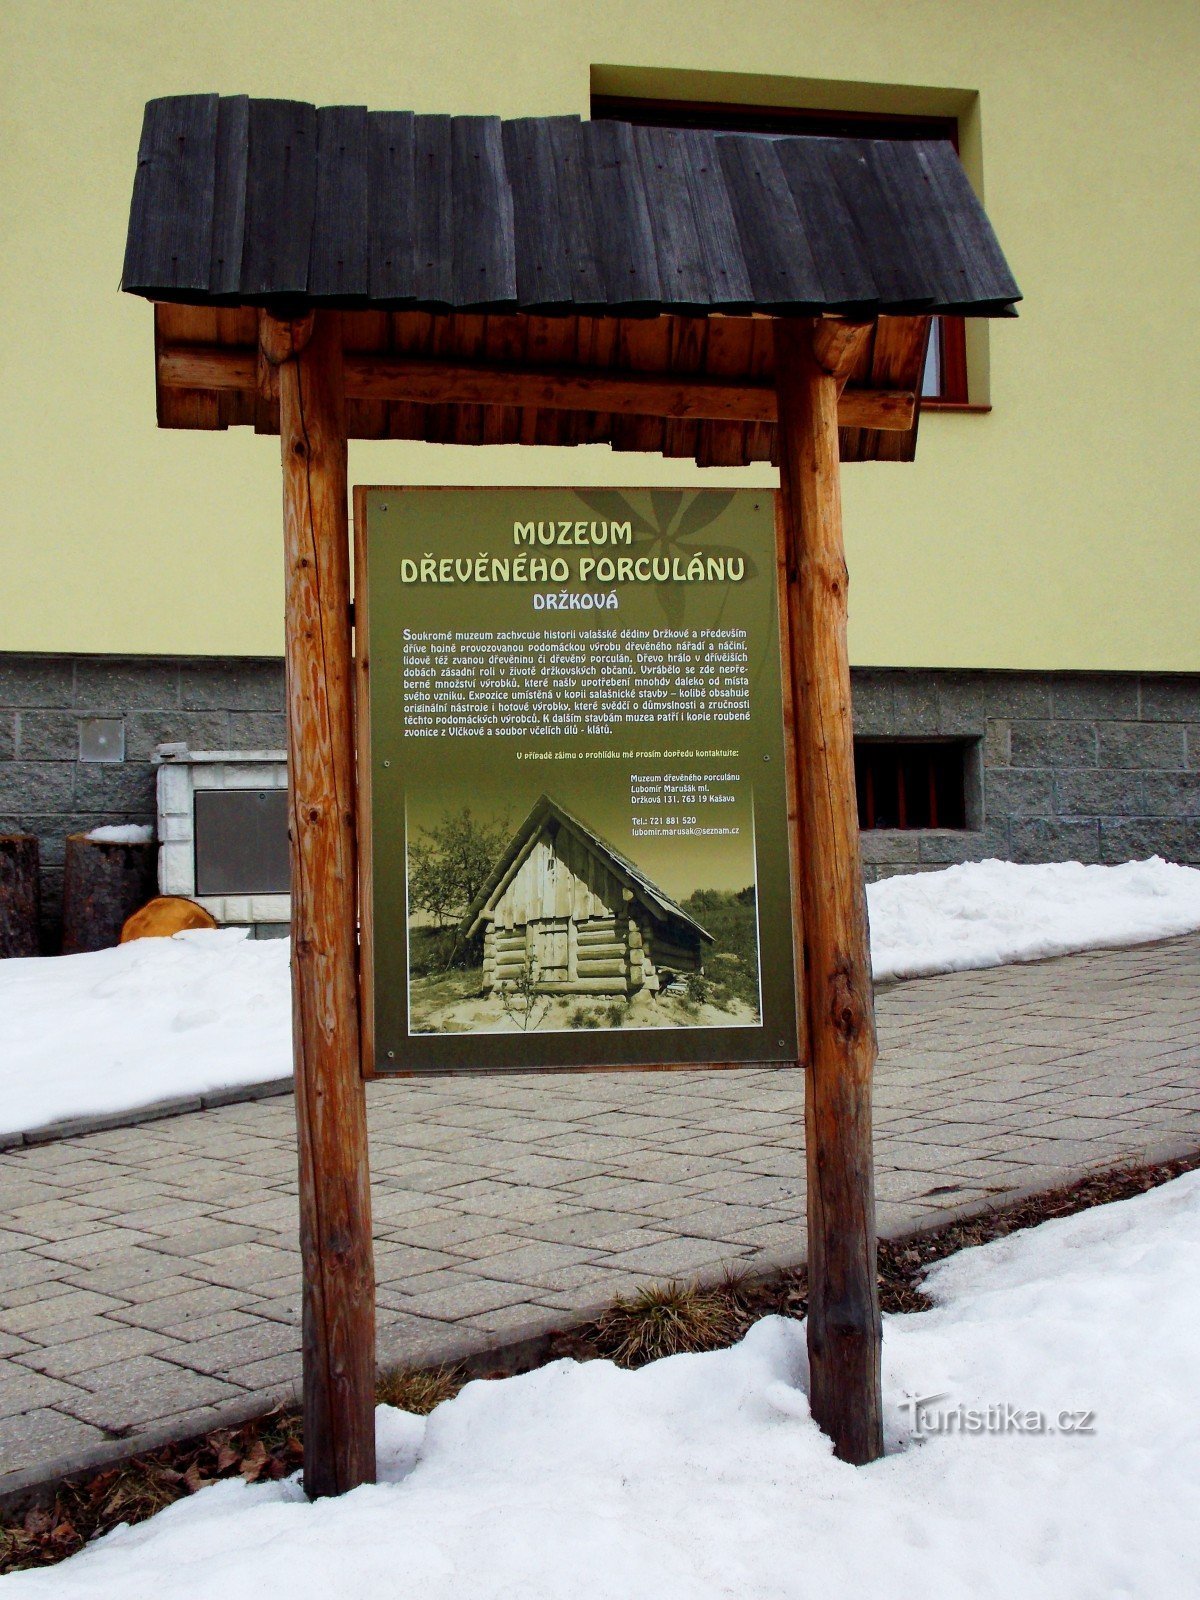 To the wooden porcelain museum in Držková near Zlín